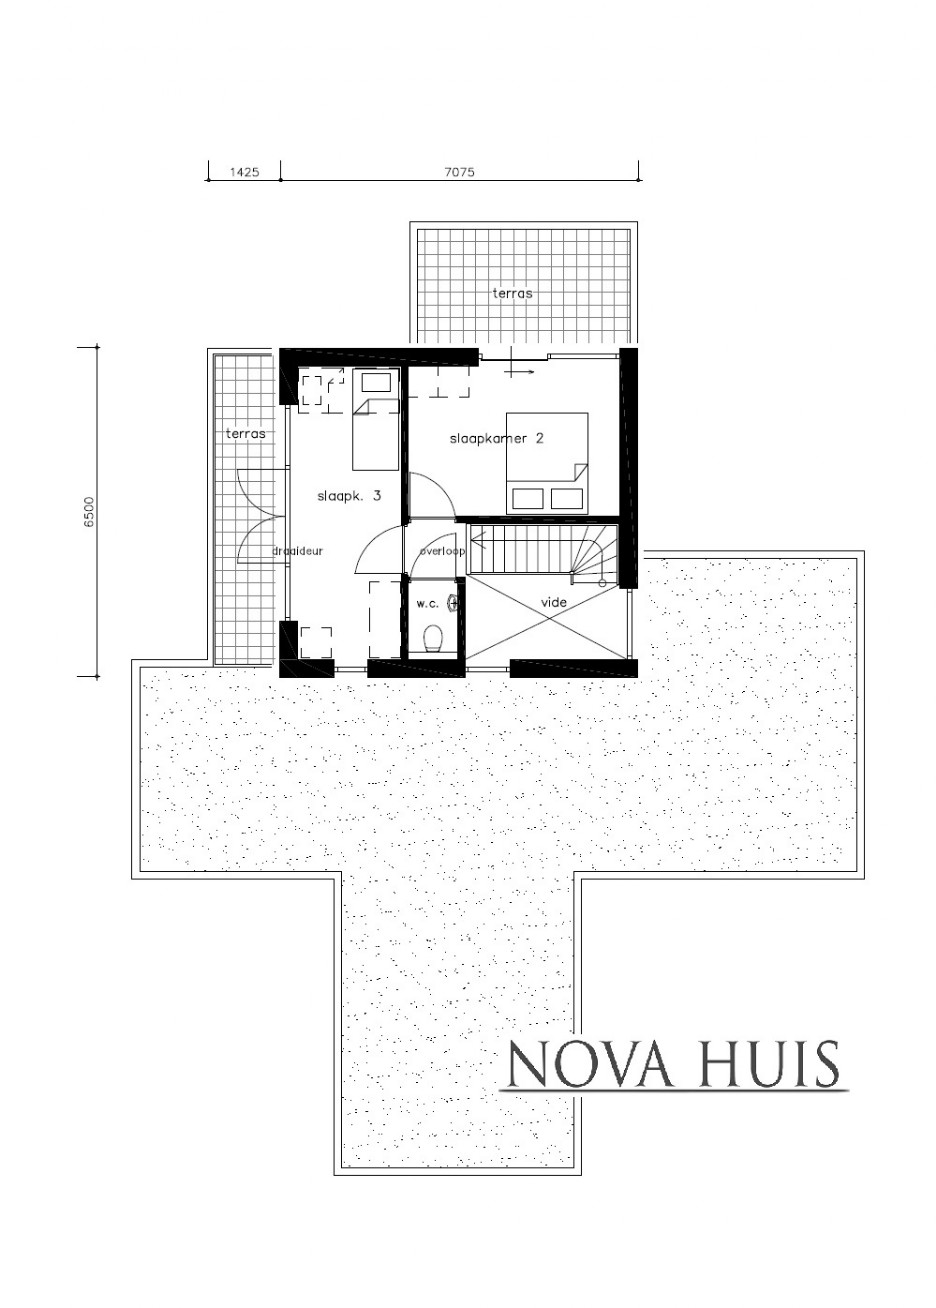 NOVA HUIS K370 bungalow levensloopbestendig kleine verdieping ATLANTA MBS Staalframebouw 